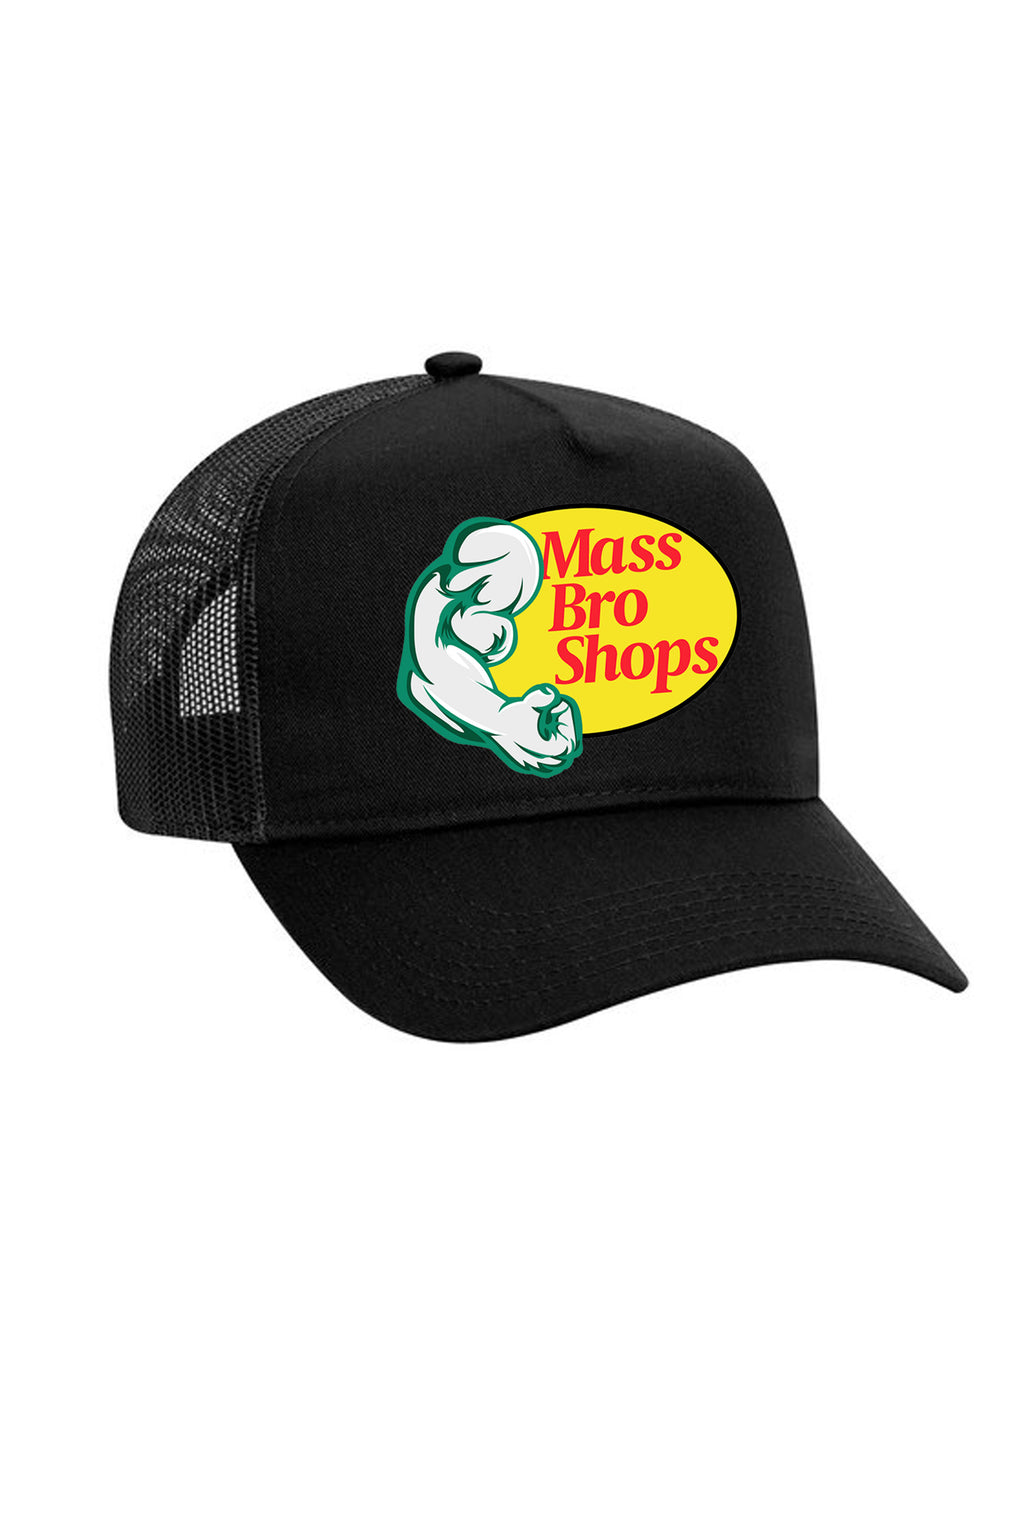 BSL Mass Bro Shops Trucker Hat - Black – DomMerch